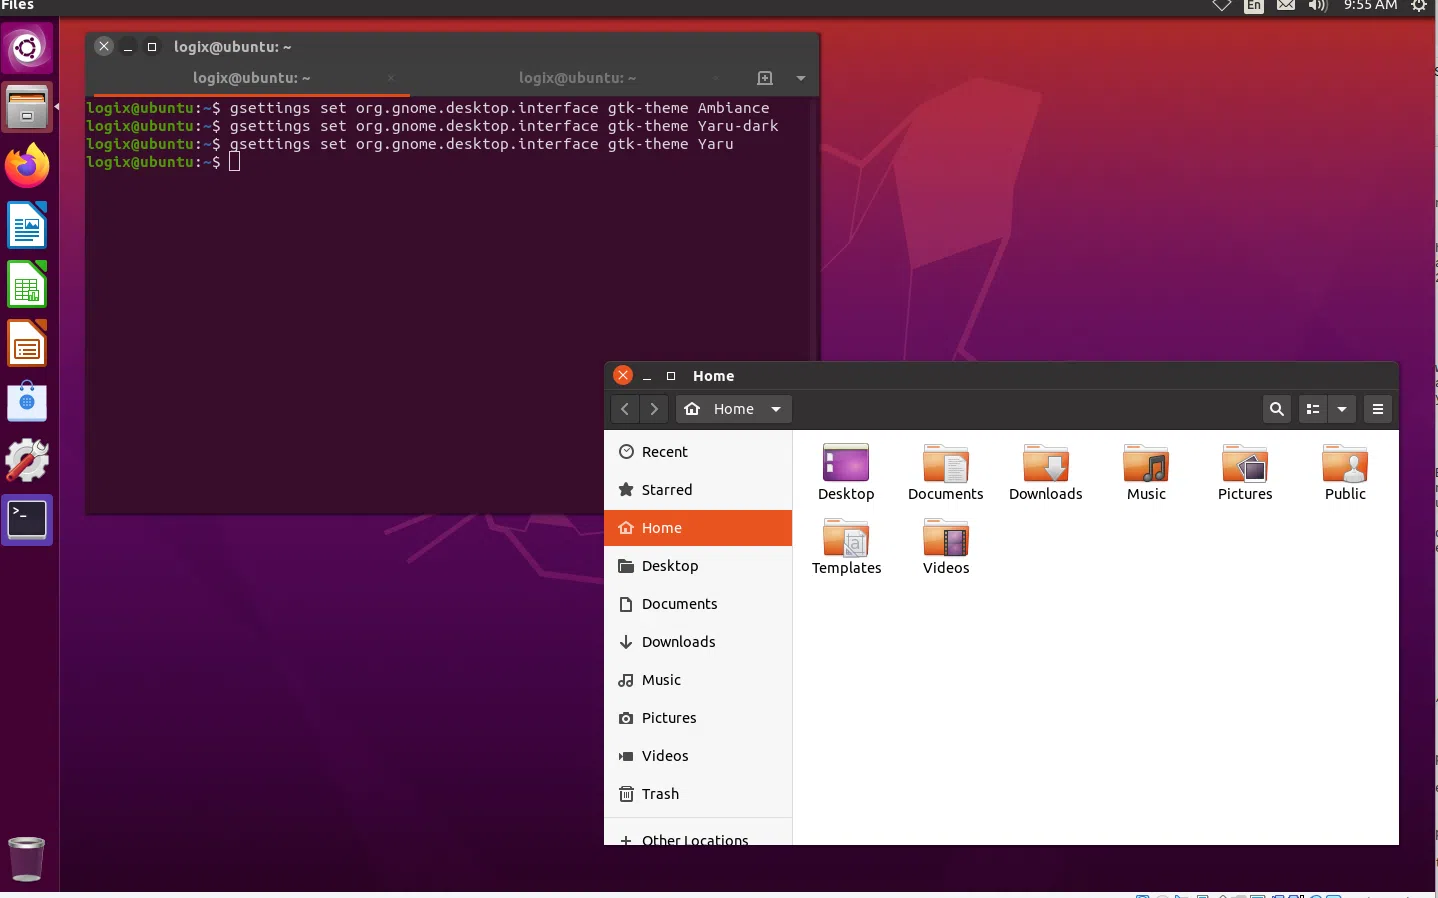 Unity yaru theme on Ubuntu 20.04